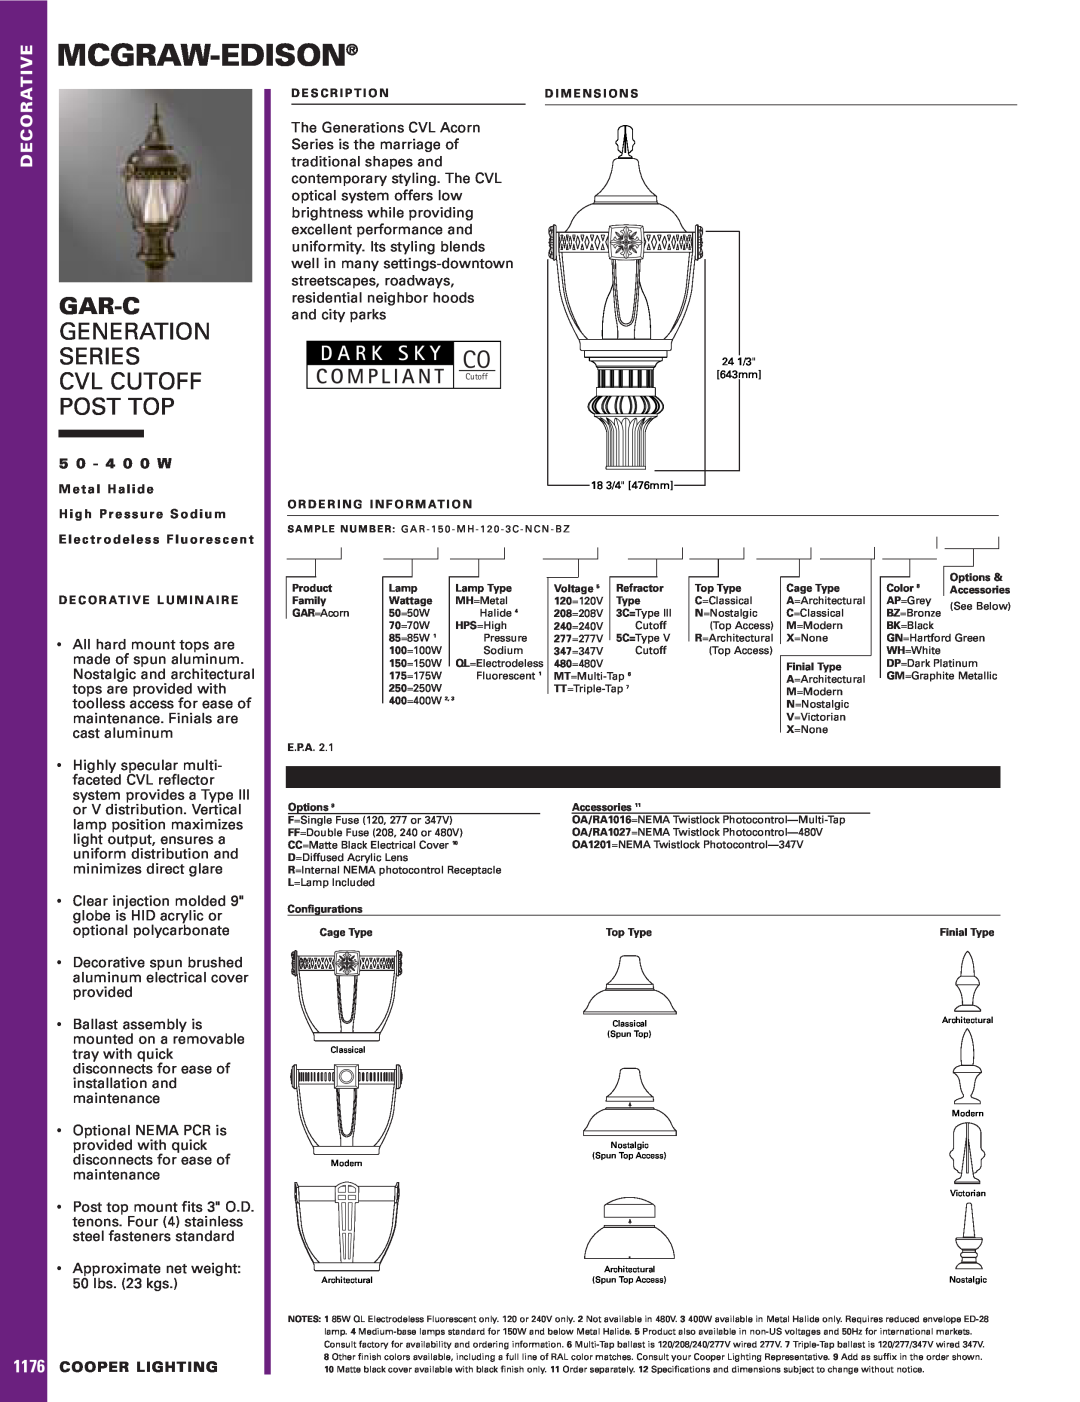 Cooper Lighting GAR-C dimensions Mcgraw-Edison, Gar-C, Generation Series Cvl Cutoff Post Top, D A R K S K Y Co, 1176 